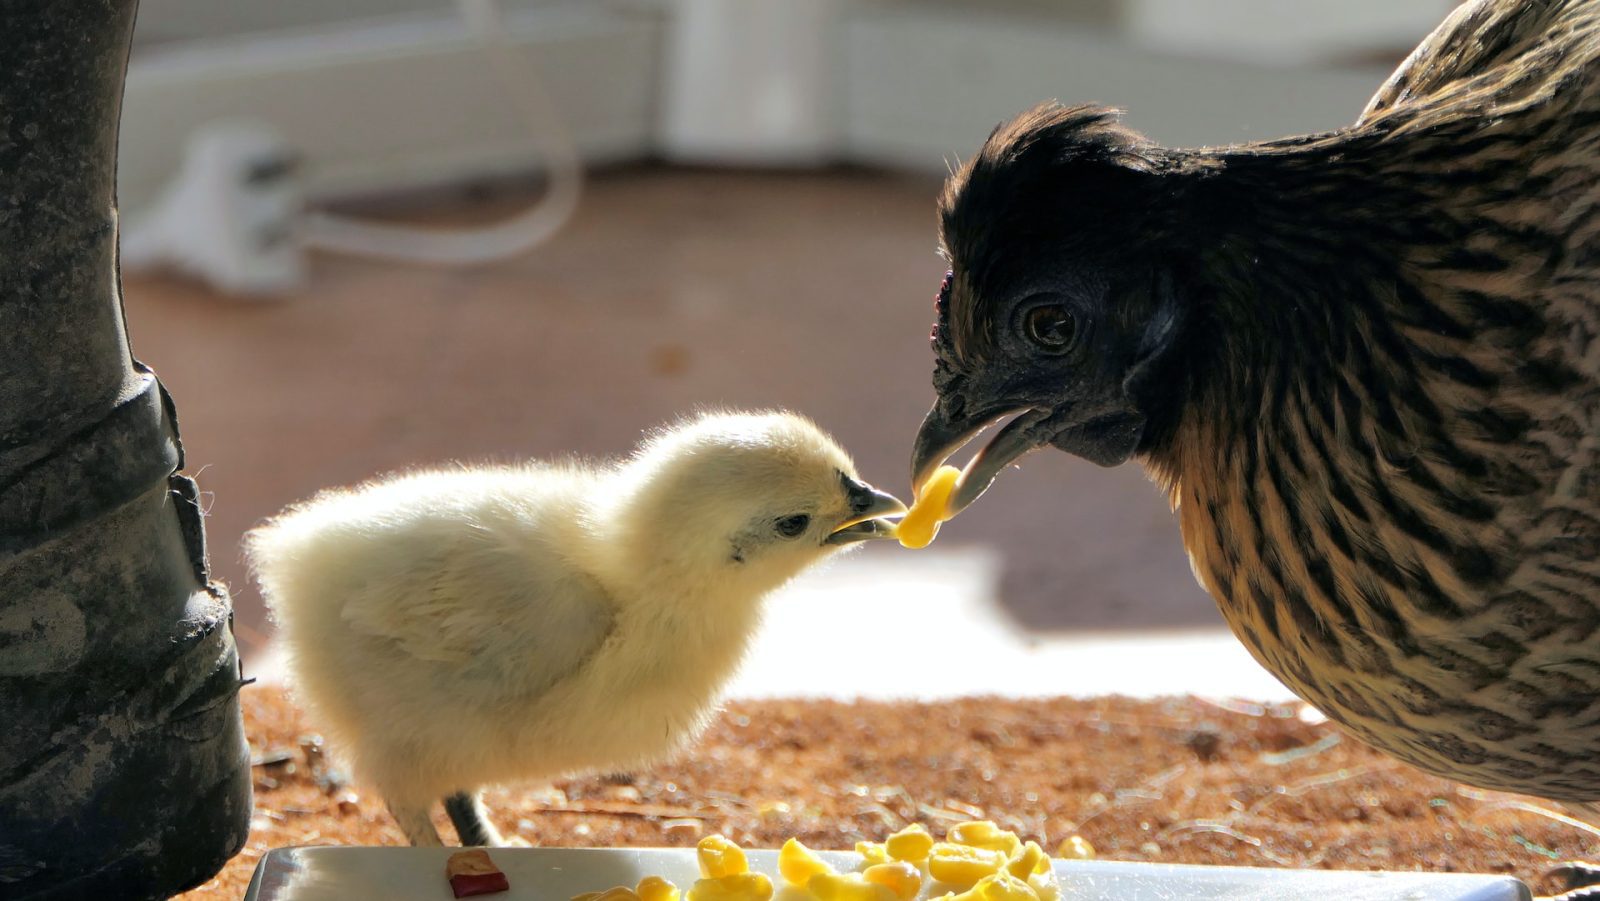 How do chicken farms fertilize their eggs